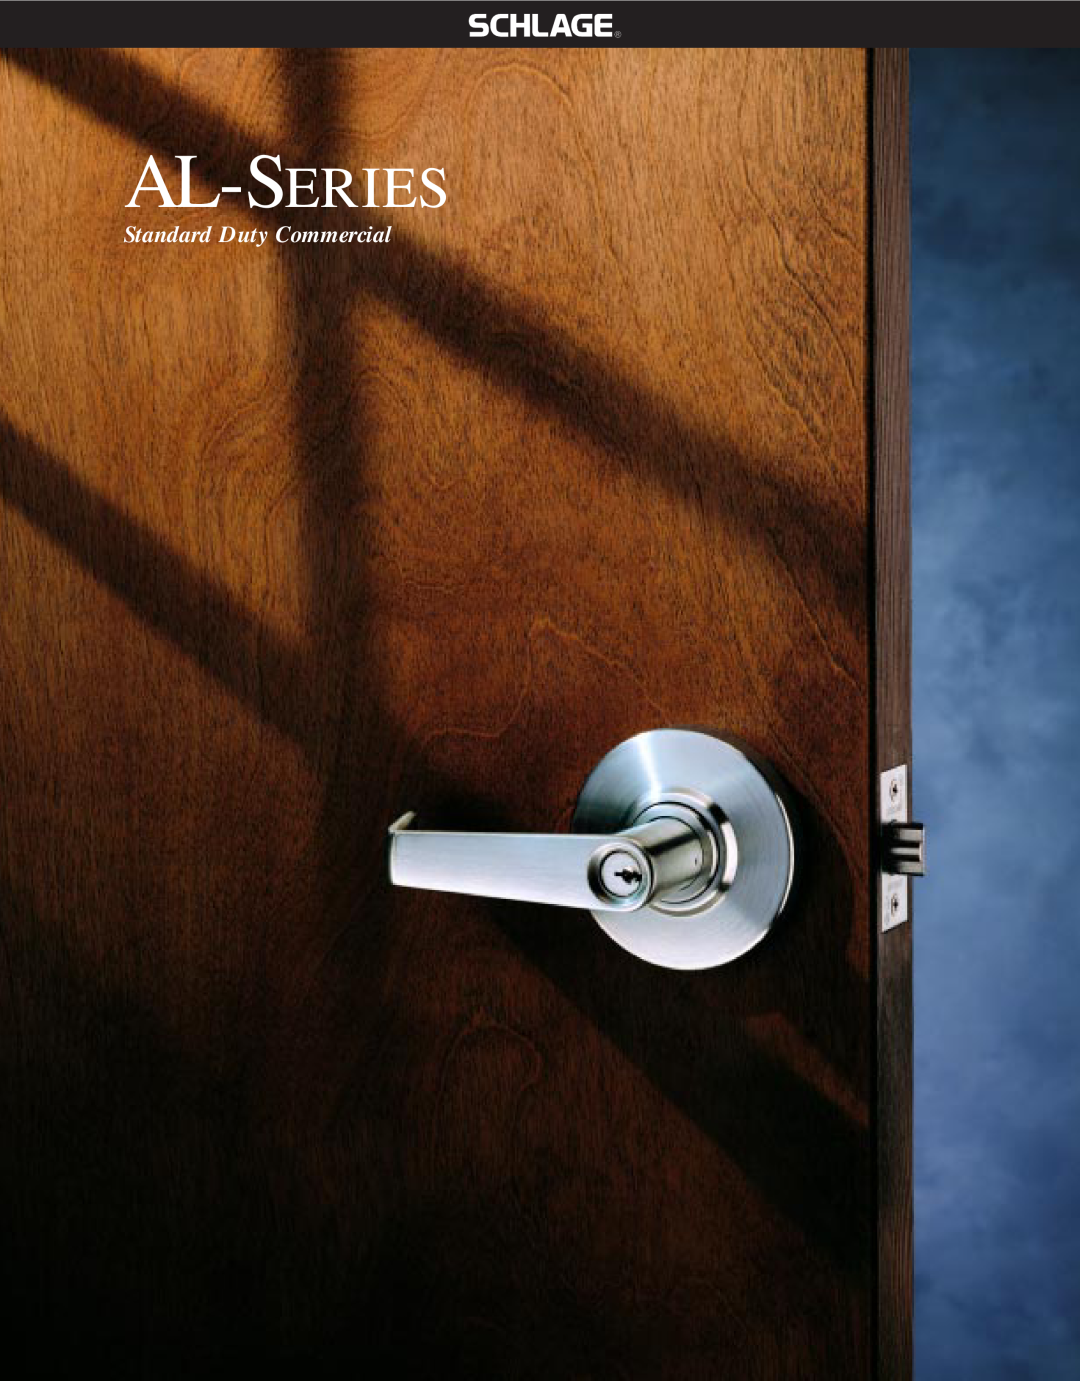 Schlage AL-SERIES manual Al-Series, Standard Duty Commercial 